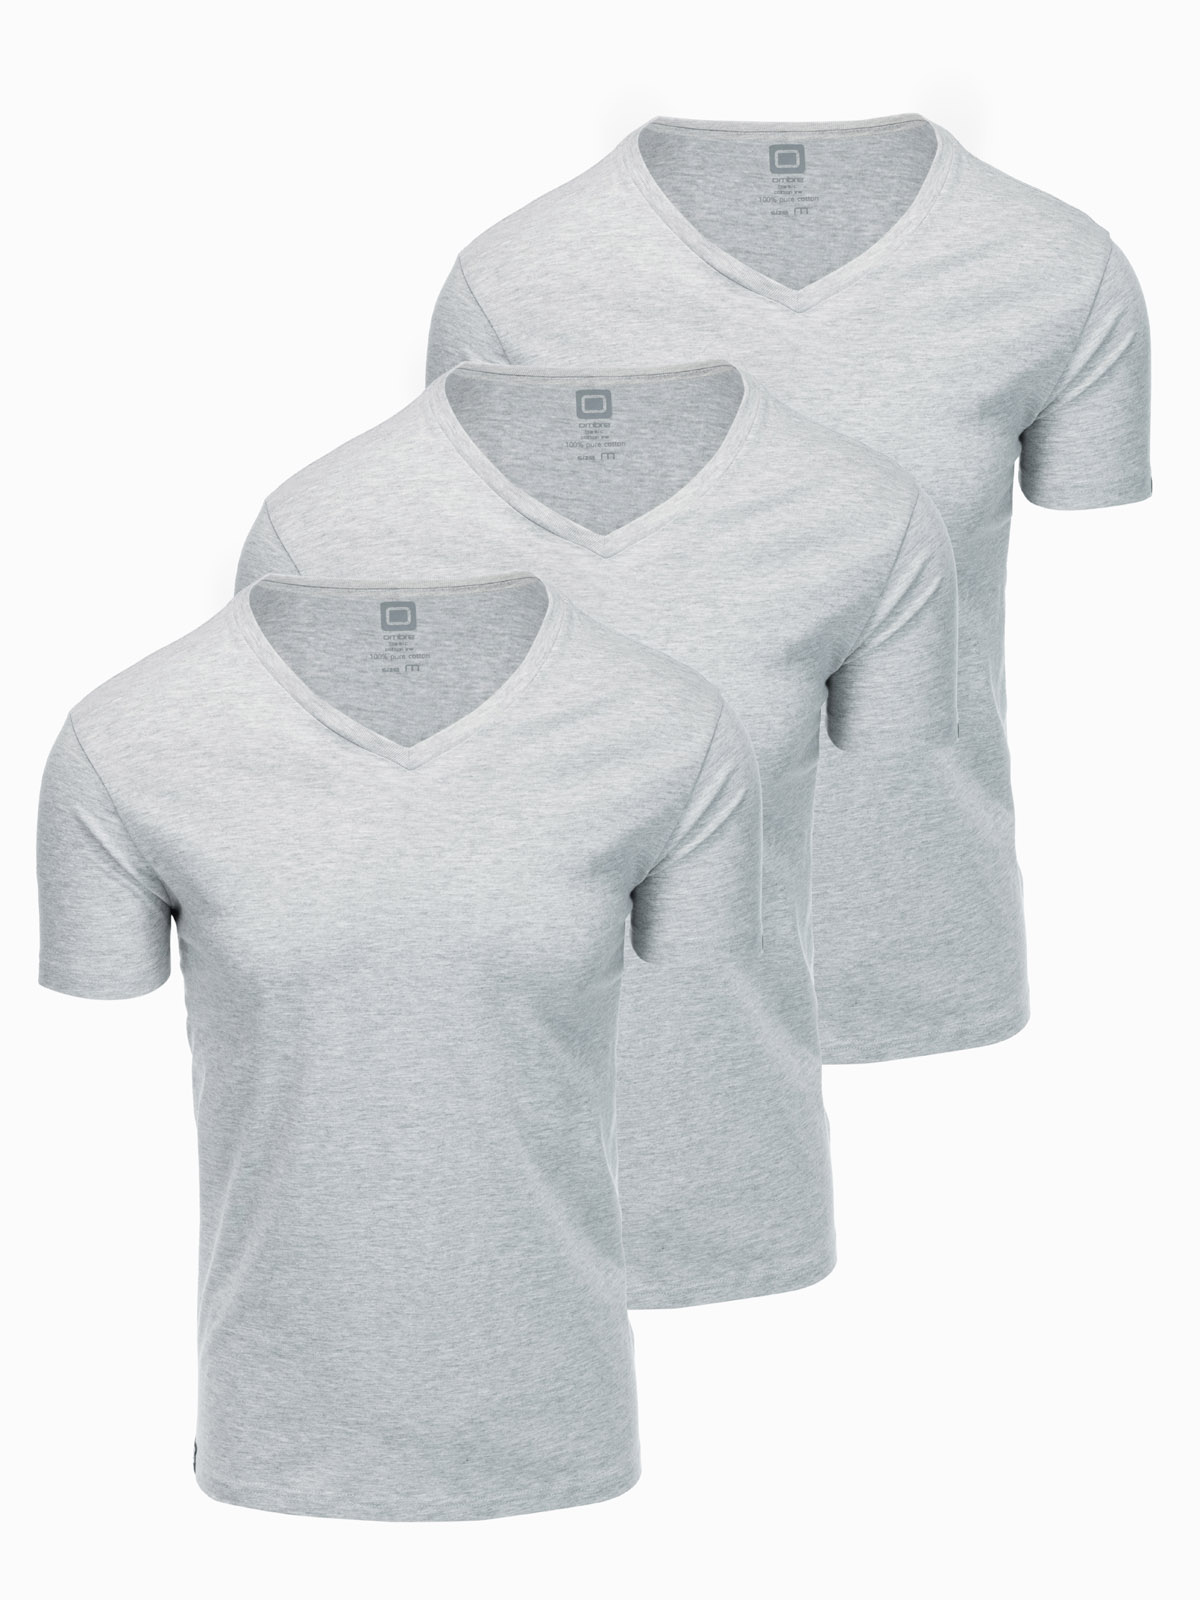 Zestaw koszulek bawełnianych V-NECK 3-pak - szary melanż V10 Z29